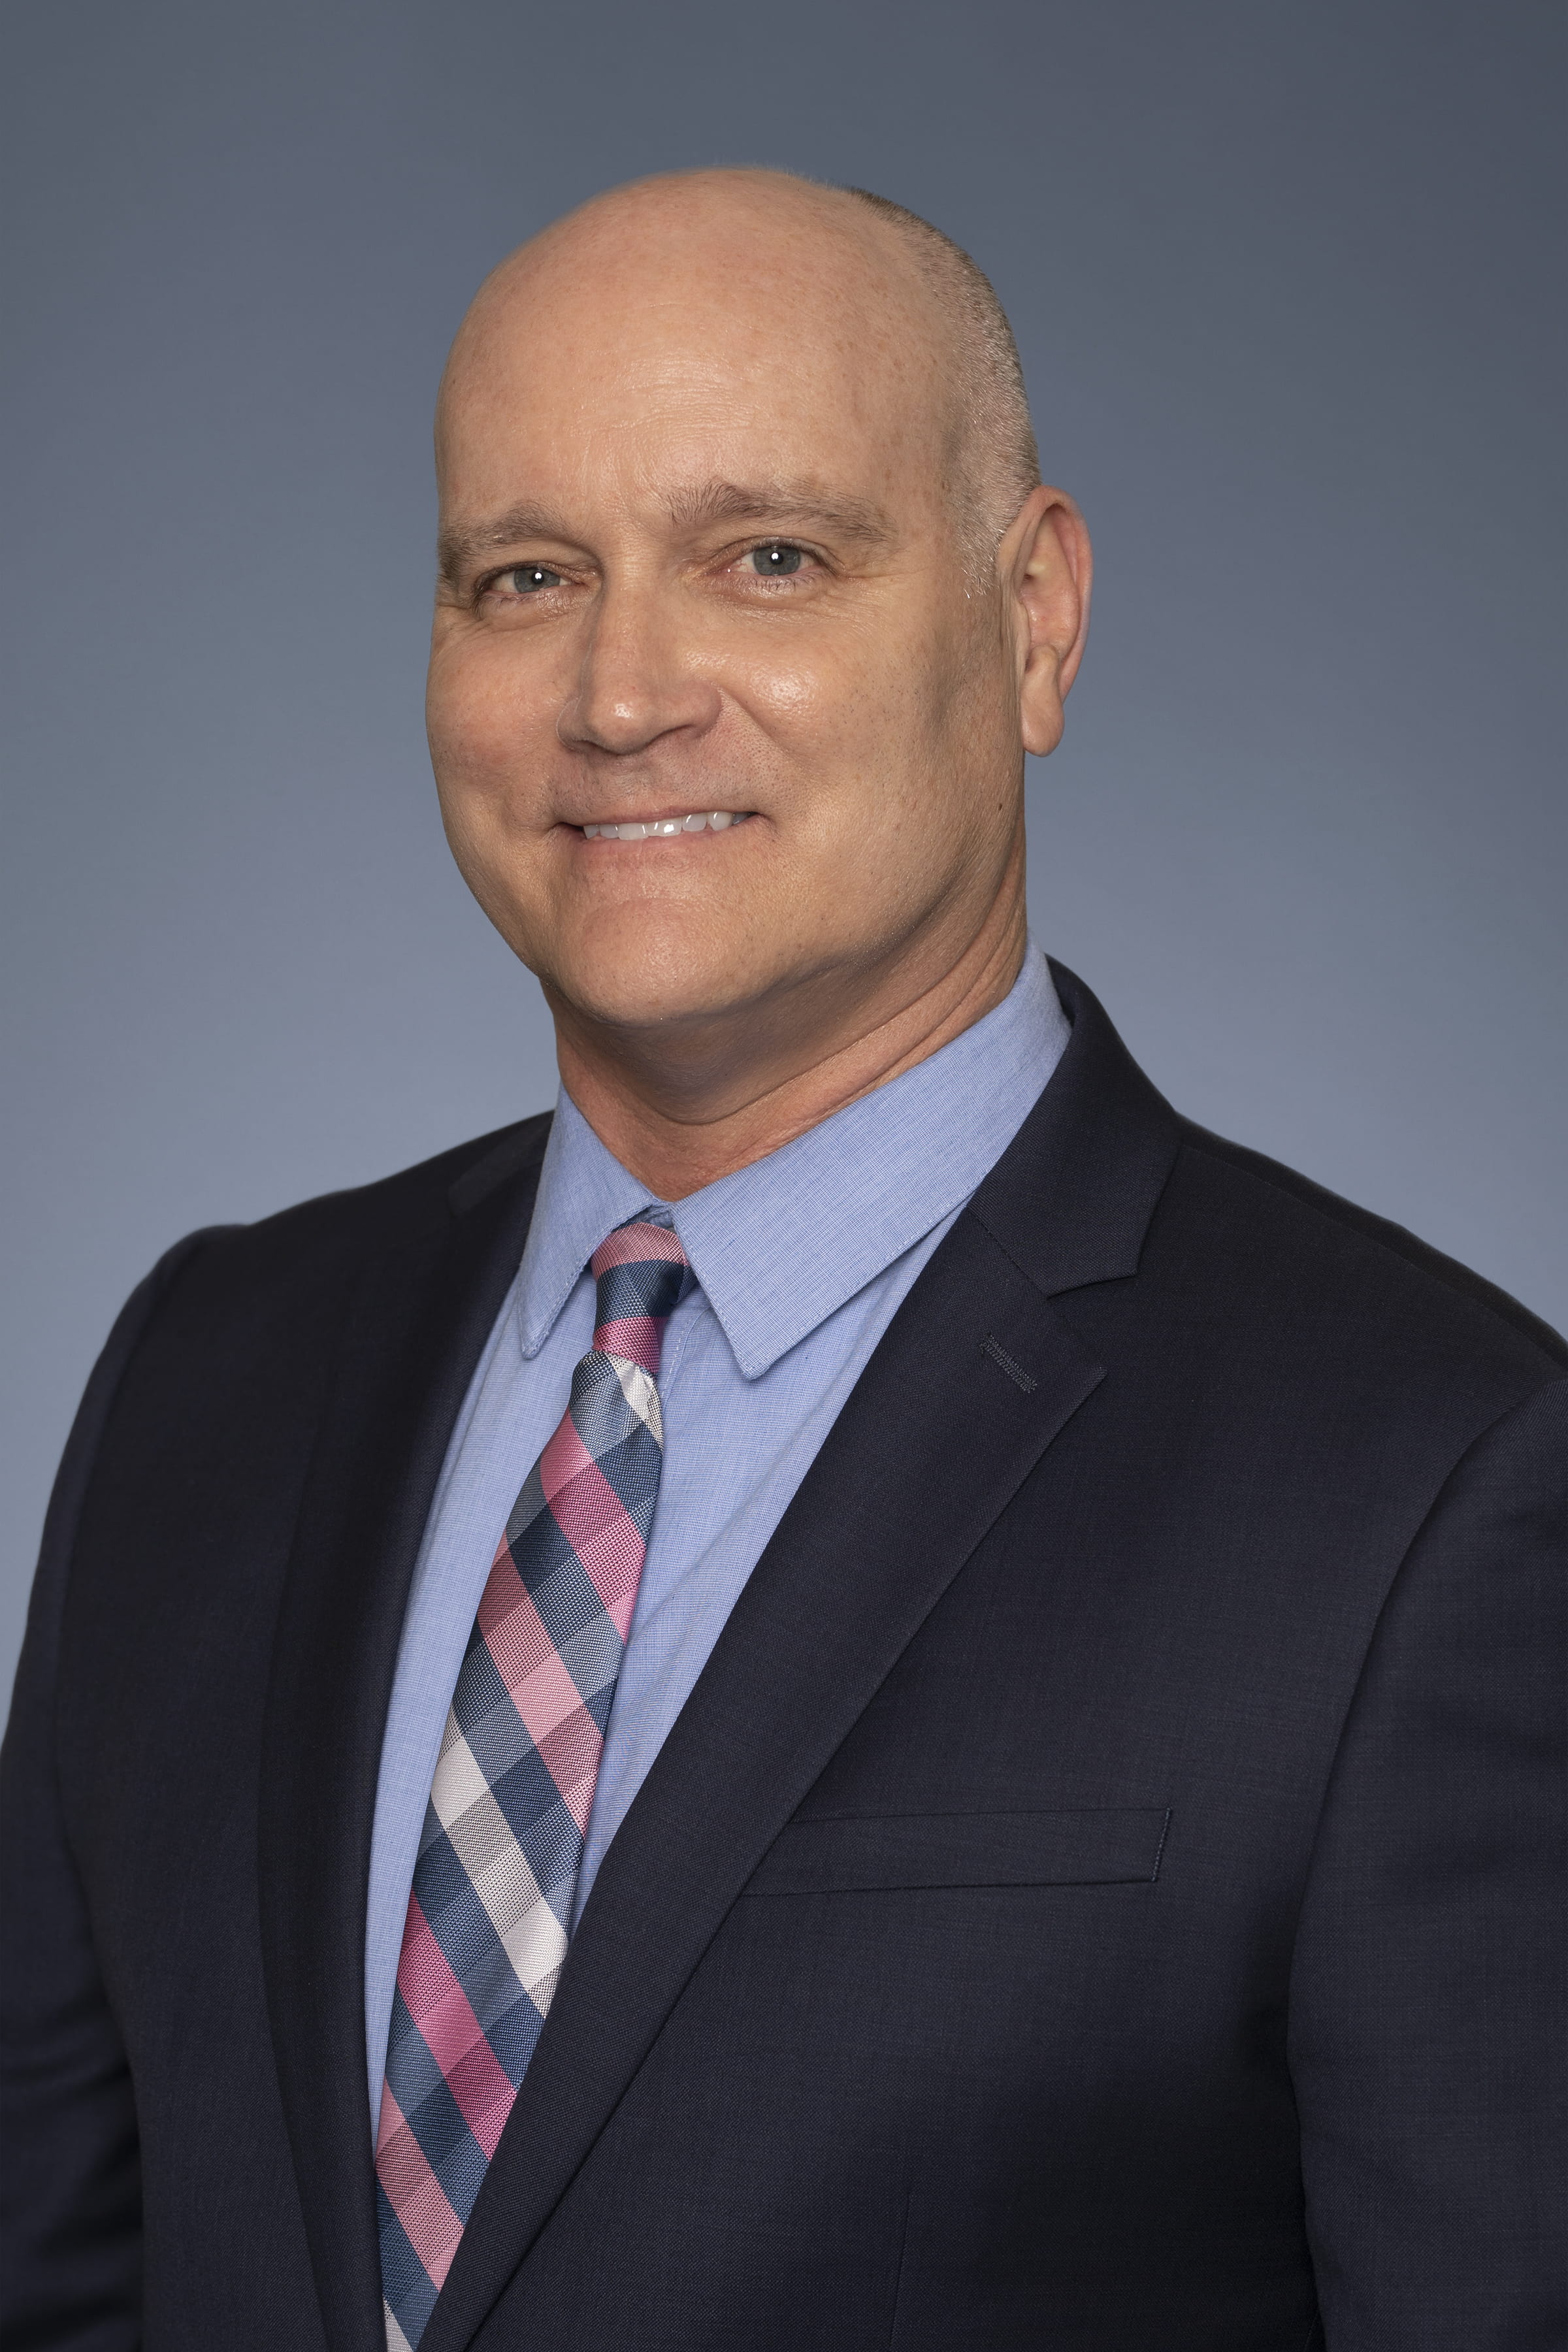 Patrick Maloney, Corporate Vice President of Operations